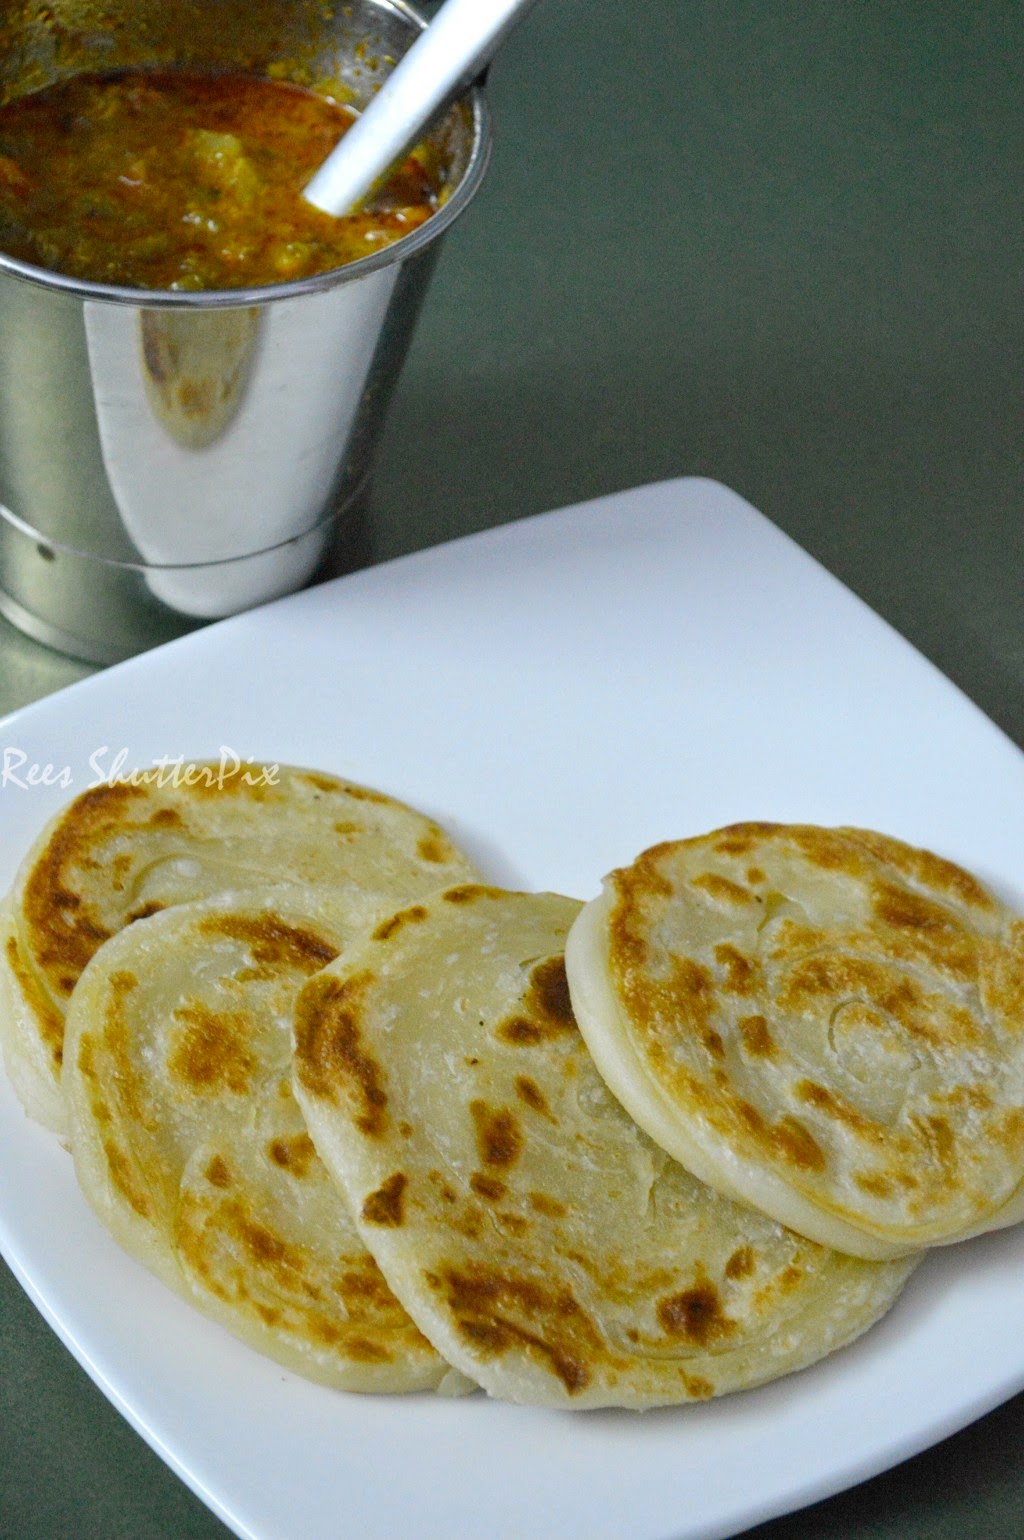 paratha,tamil nadu kerala style, tamil recipe parotta, roadside, easy picture recipe, homemade parotta, veg salna in tamil, easy step by step picture to make parotta at home